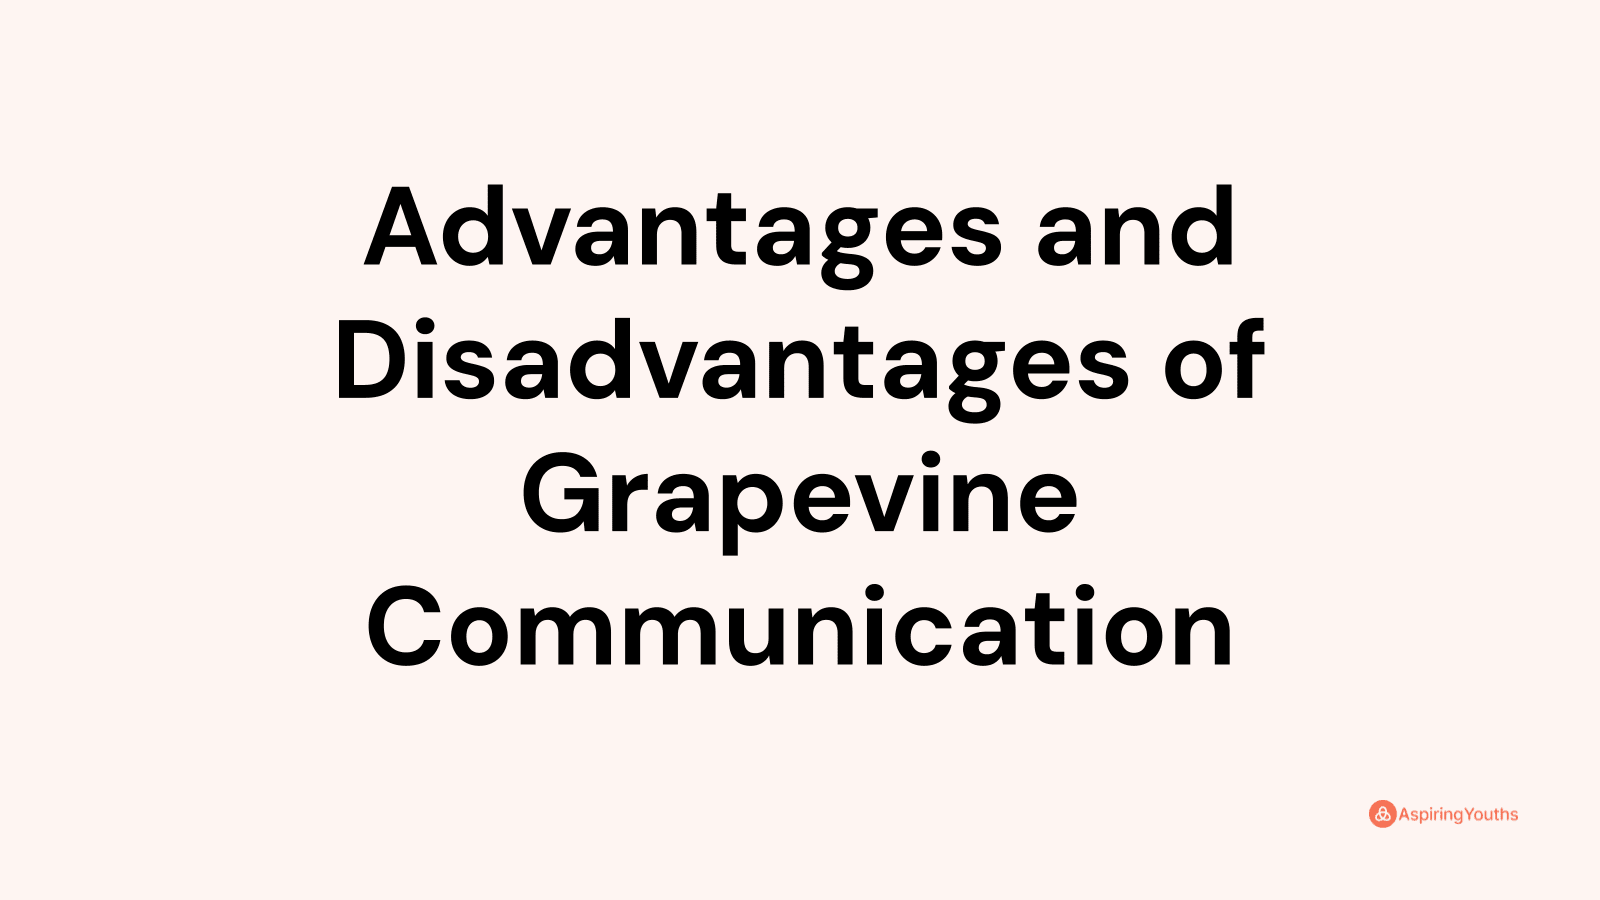 Advantages and disadvantages of Grapevine Communication